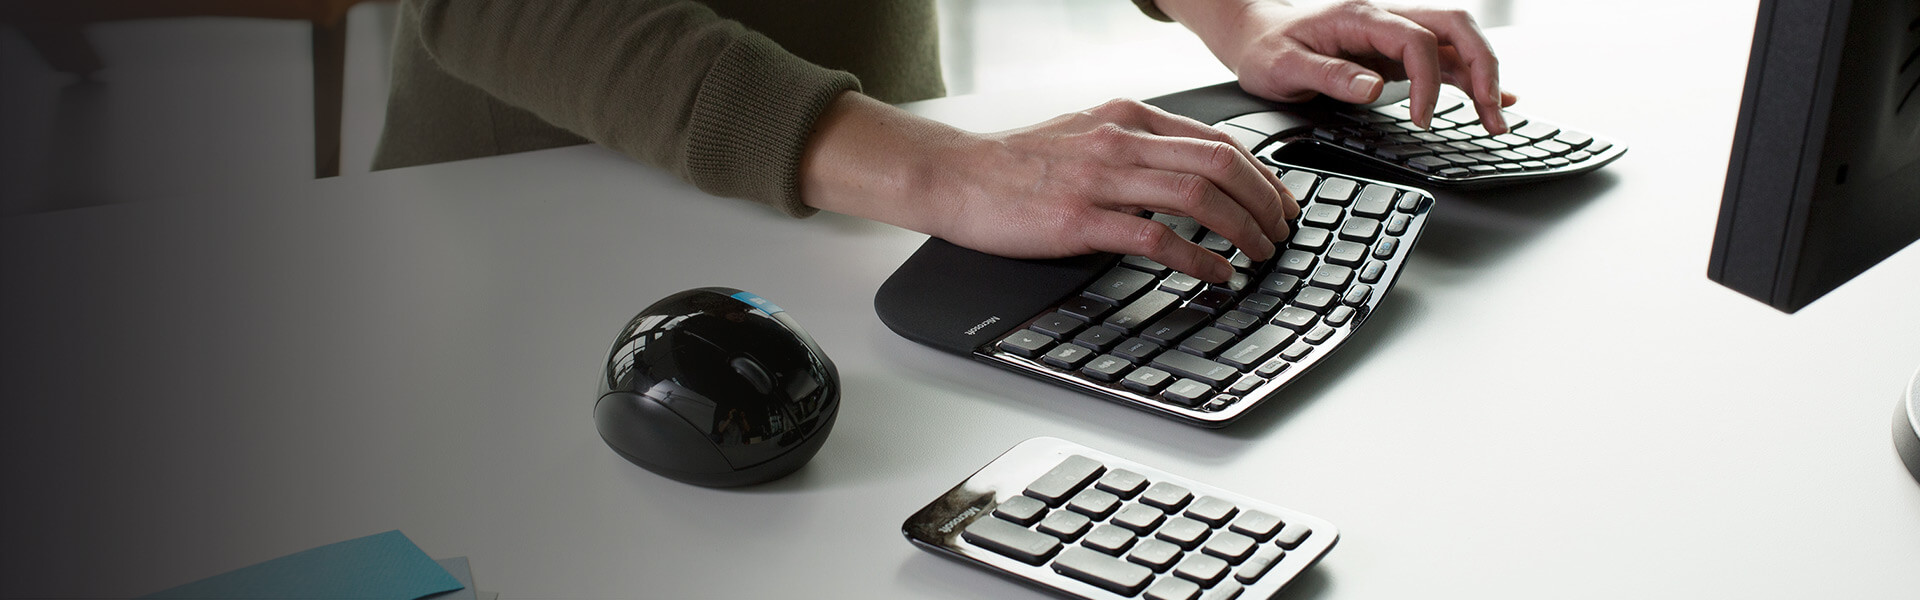 Ergonomic keyboard and mouse